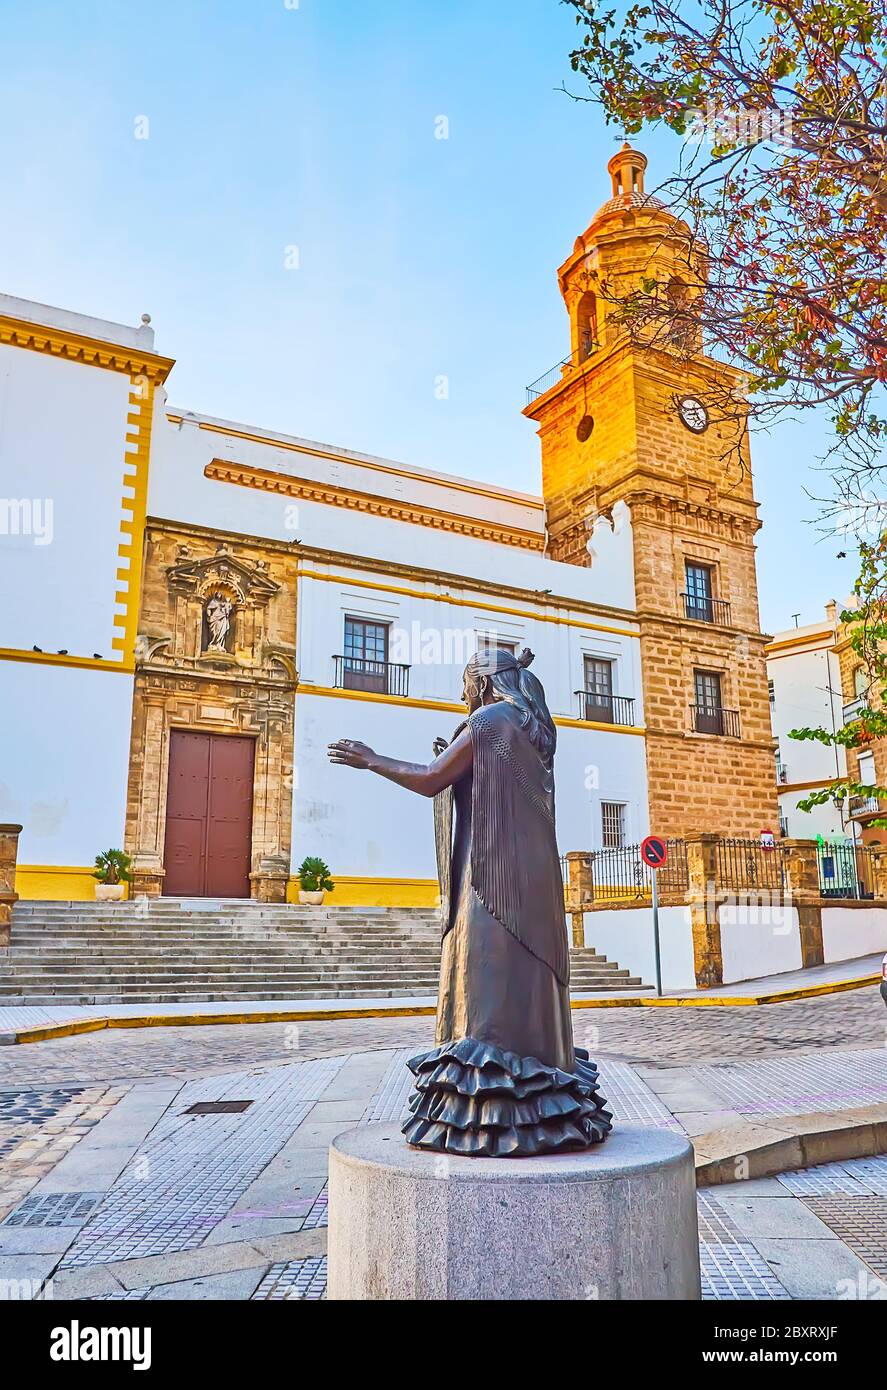 Le monument de la chanteuse Pena Flamenca, célèbre comme la Perla de Cadix (Perl de Cadix), situé dans la rue Santo Domingo en face de la façade et de la cloche Banque D'Images